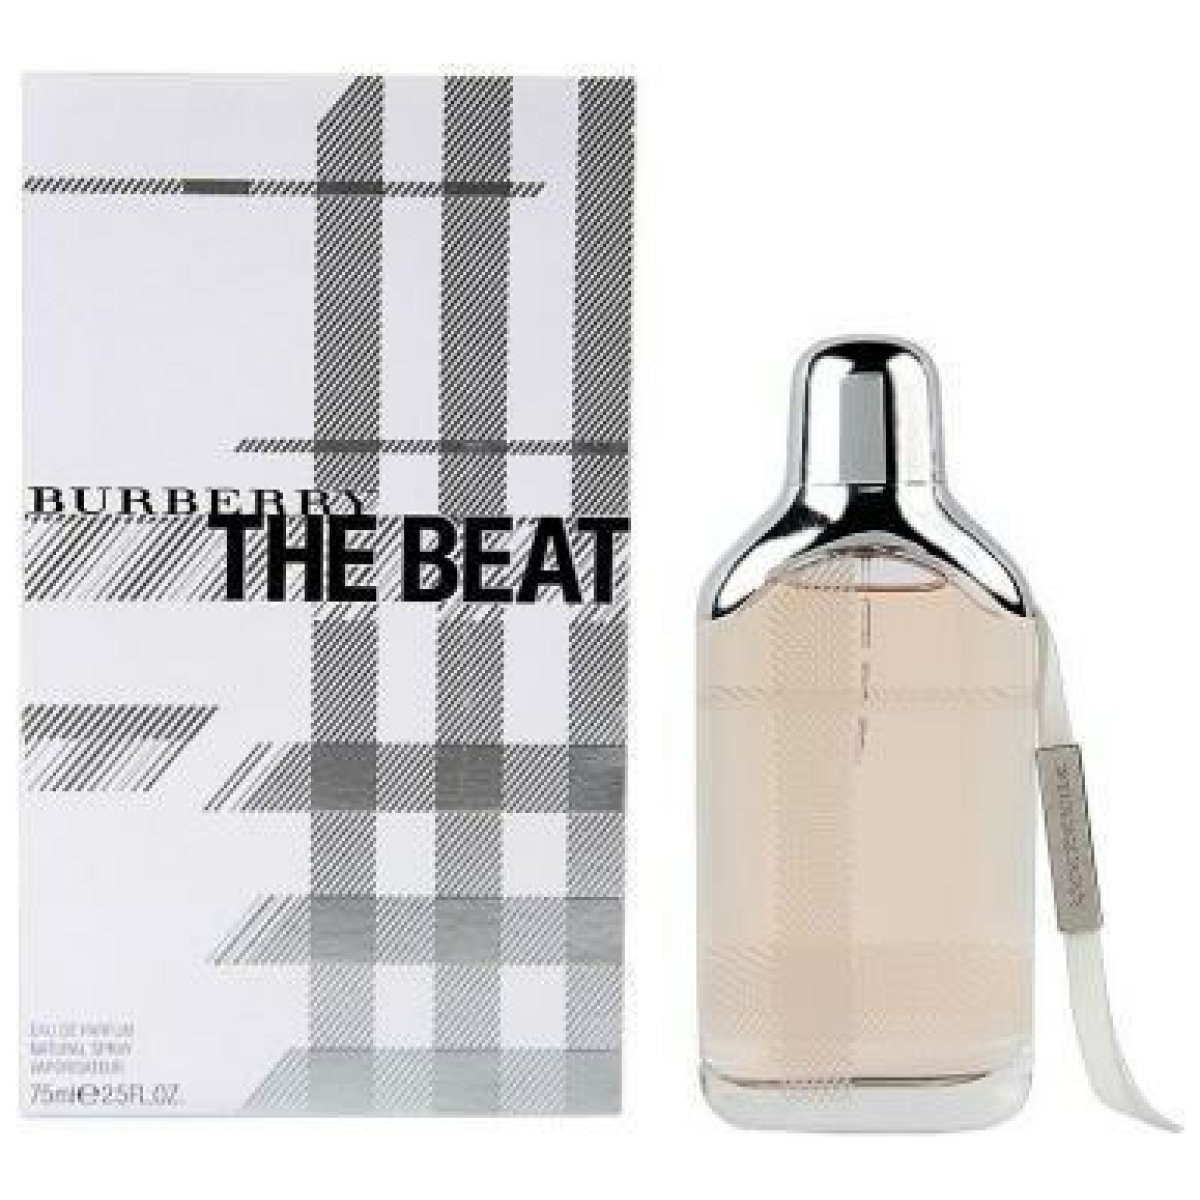 Burberry The Beat EDP Perfume For Women 75ml